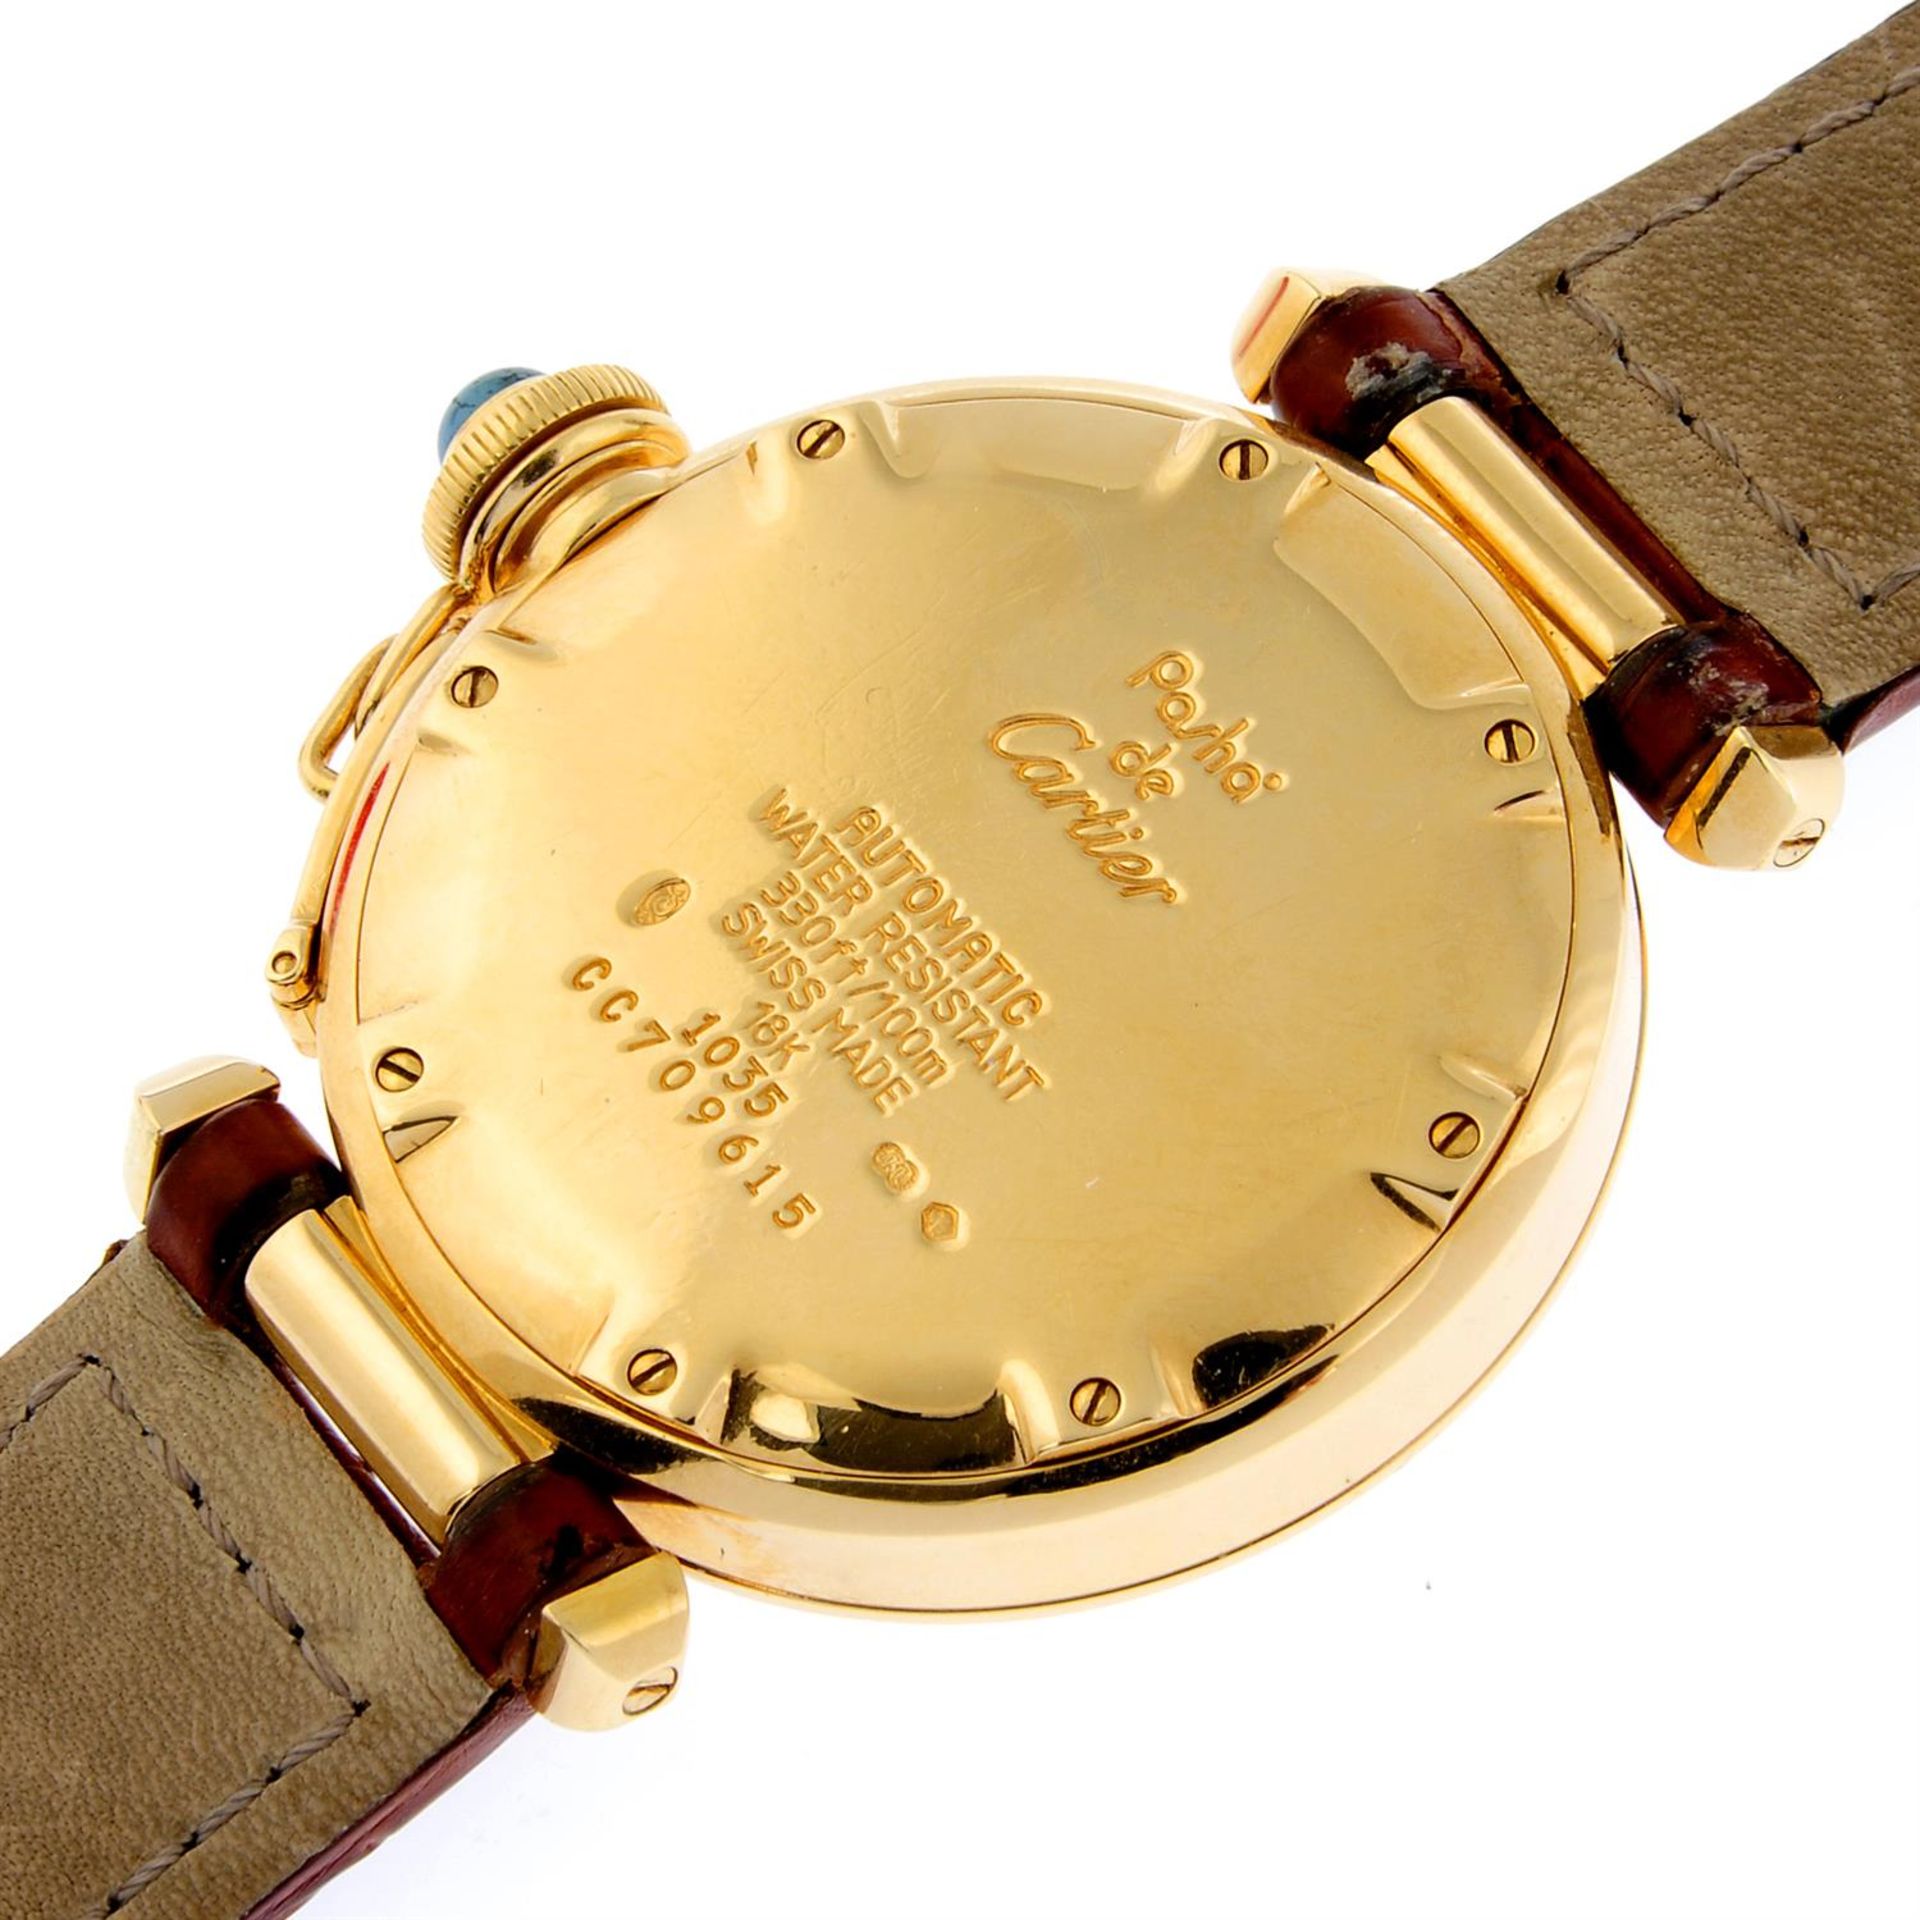 CARTIER - an 18ct yellow gold Pasha wrist watch, 35mm. - Image 4 of 6